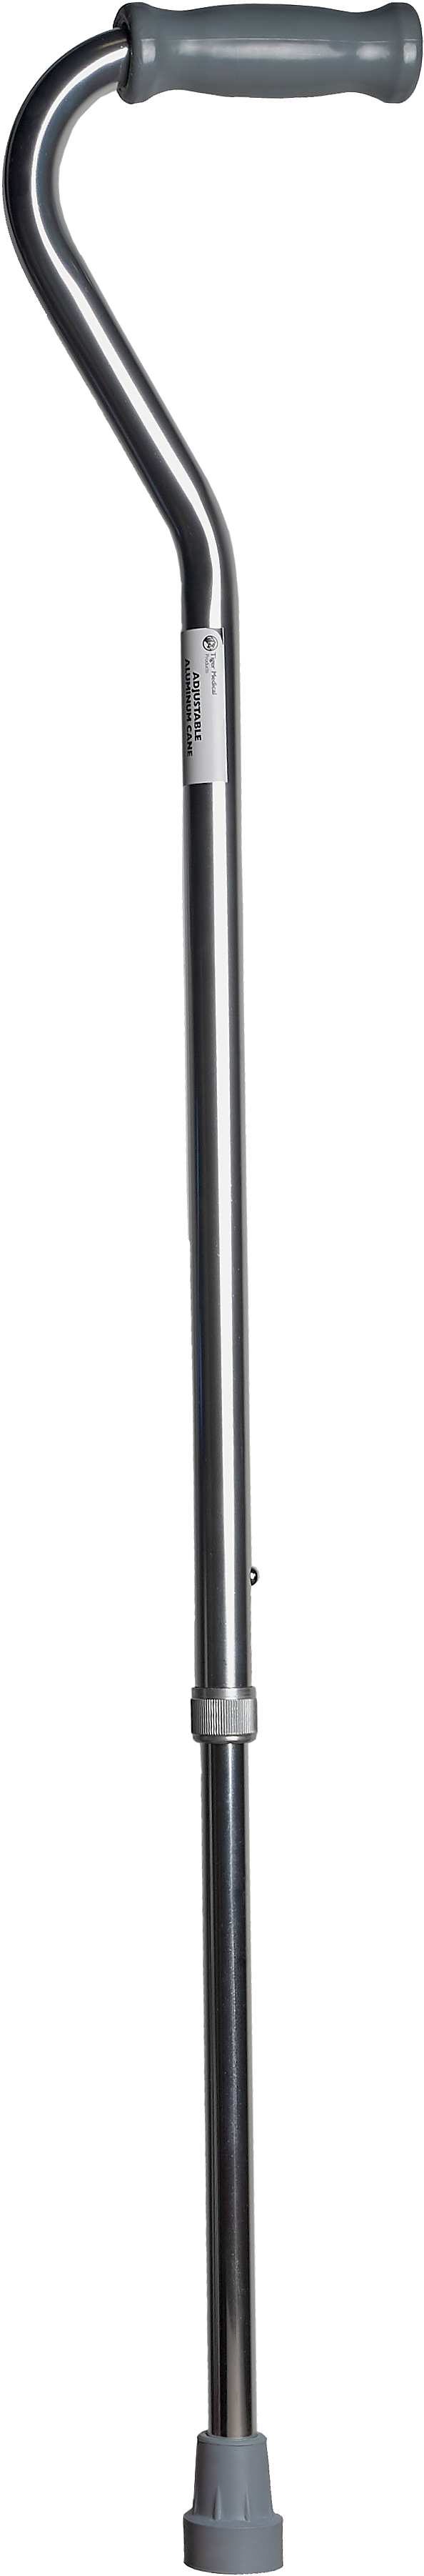 Aluminum Adjustable Canes - Musical Instrument Clipart (2625x3945), Png Download